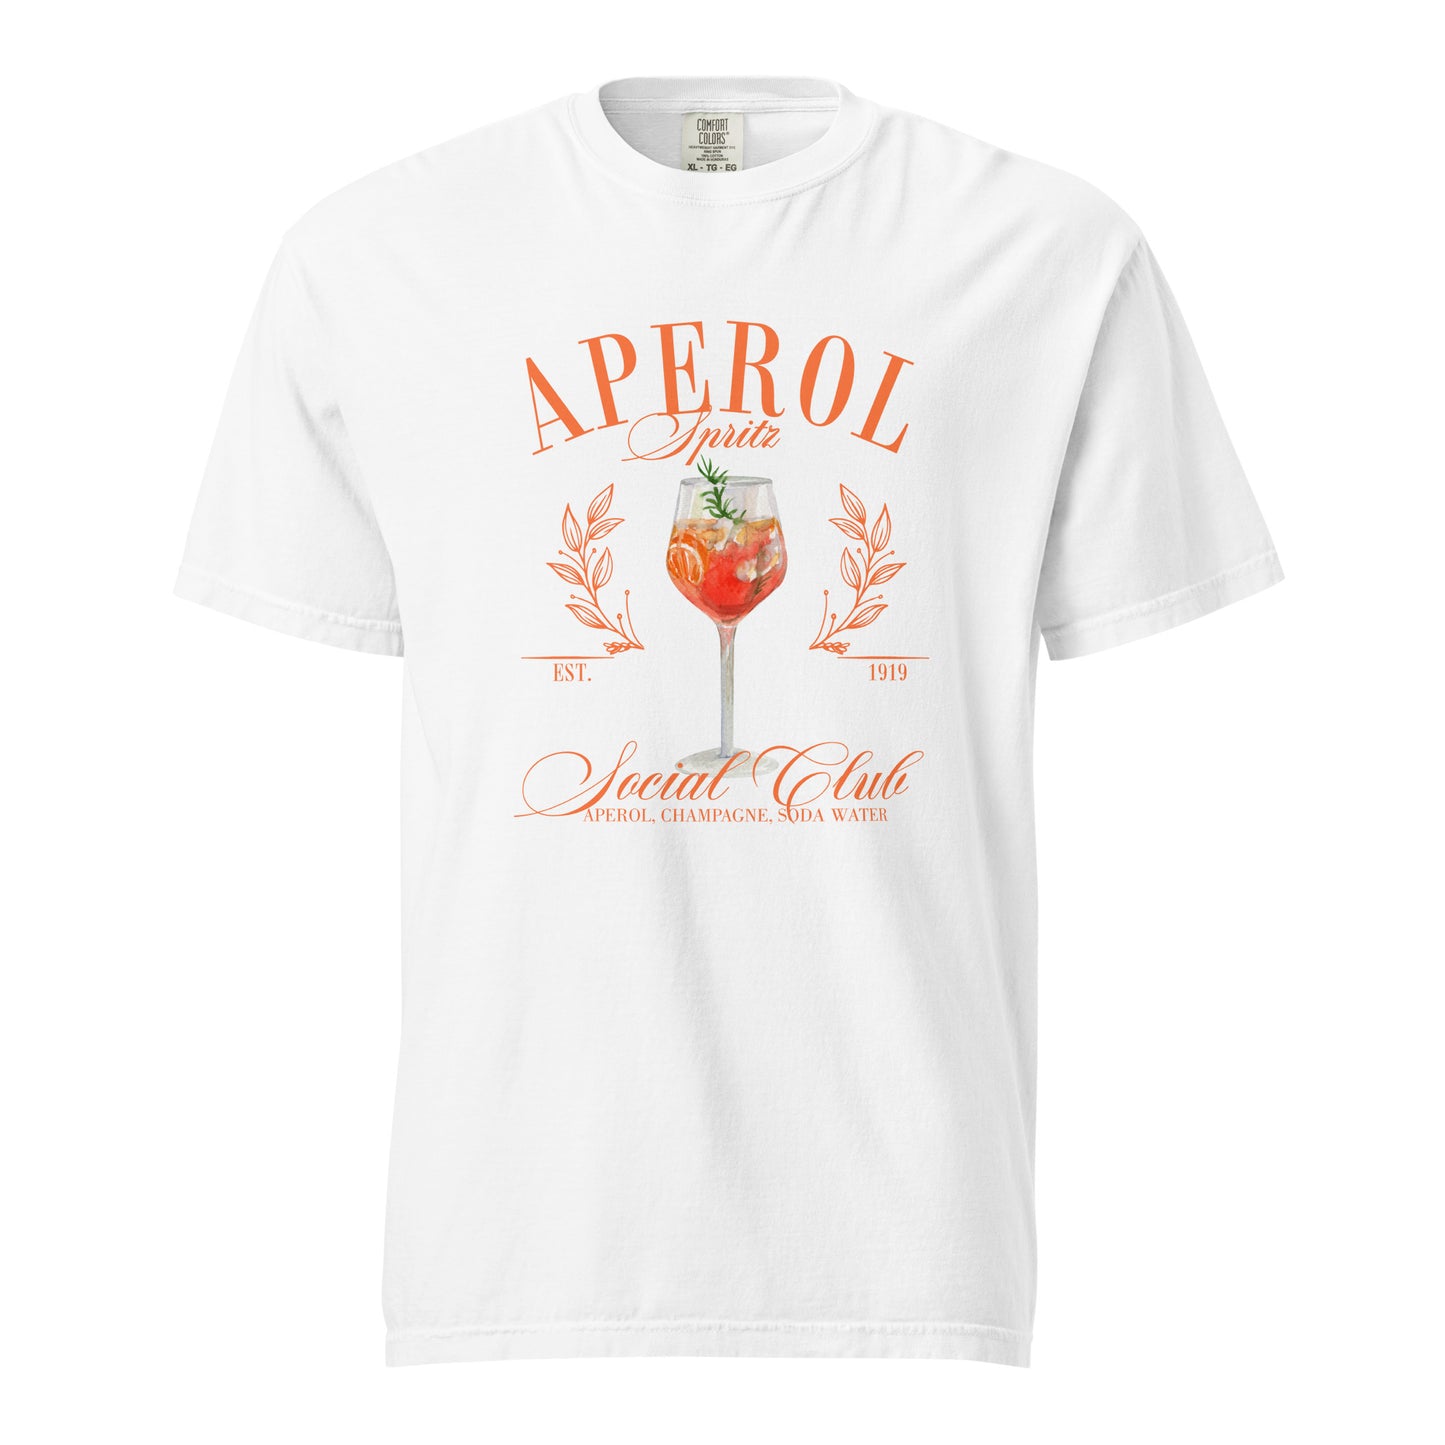 Aperol Spritz Social Club Tee